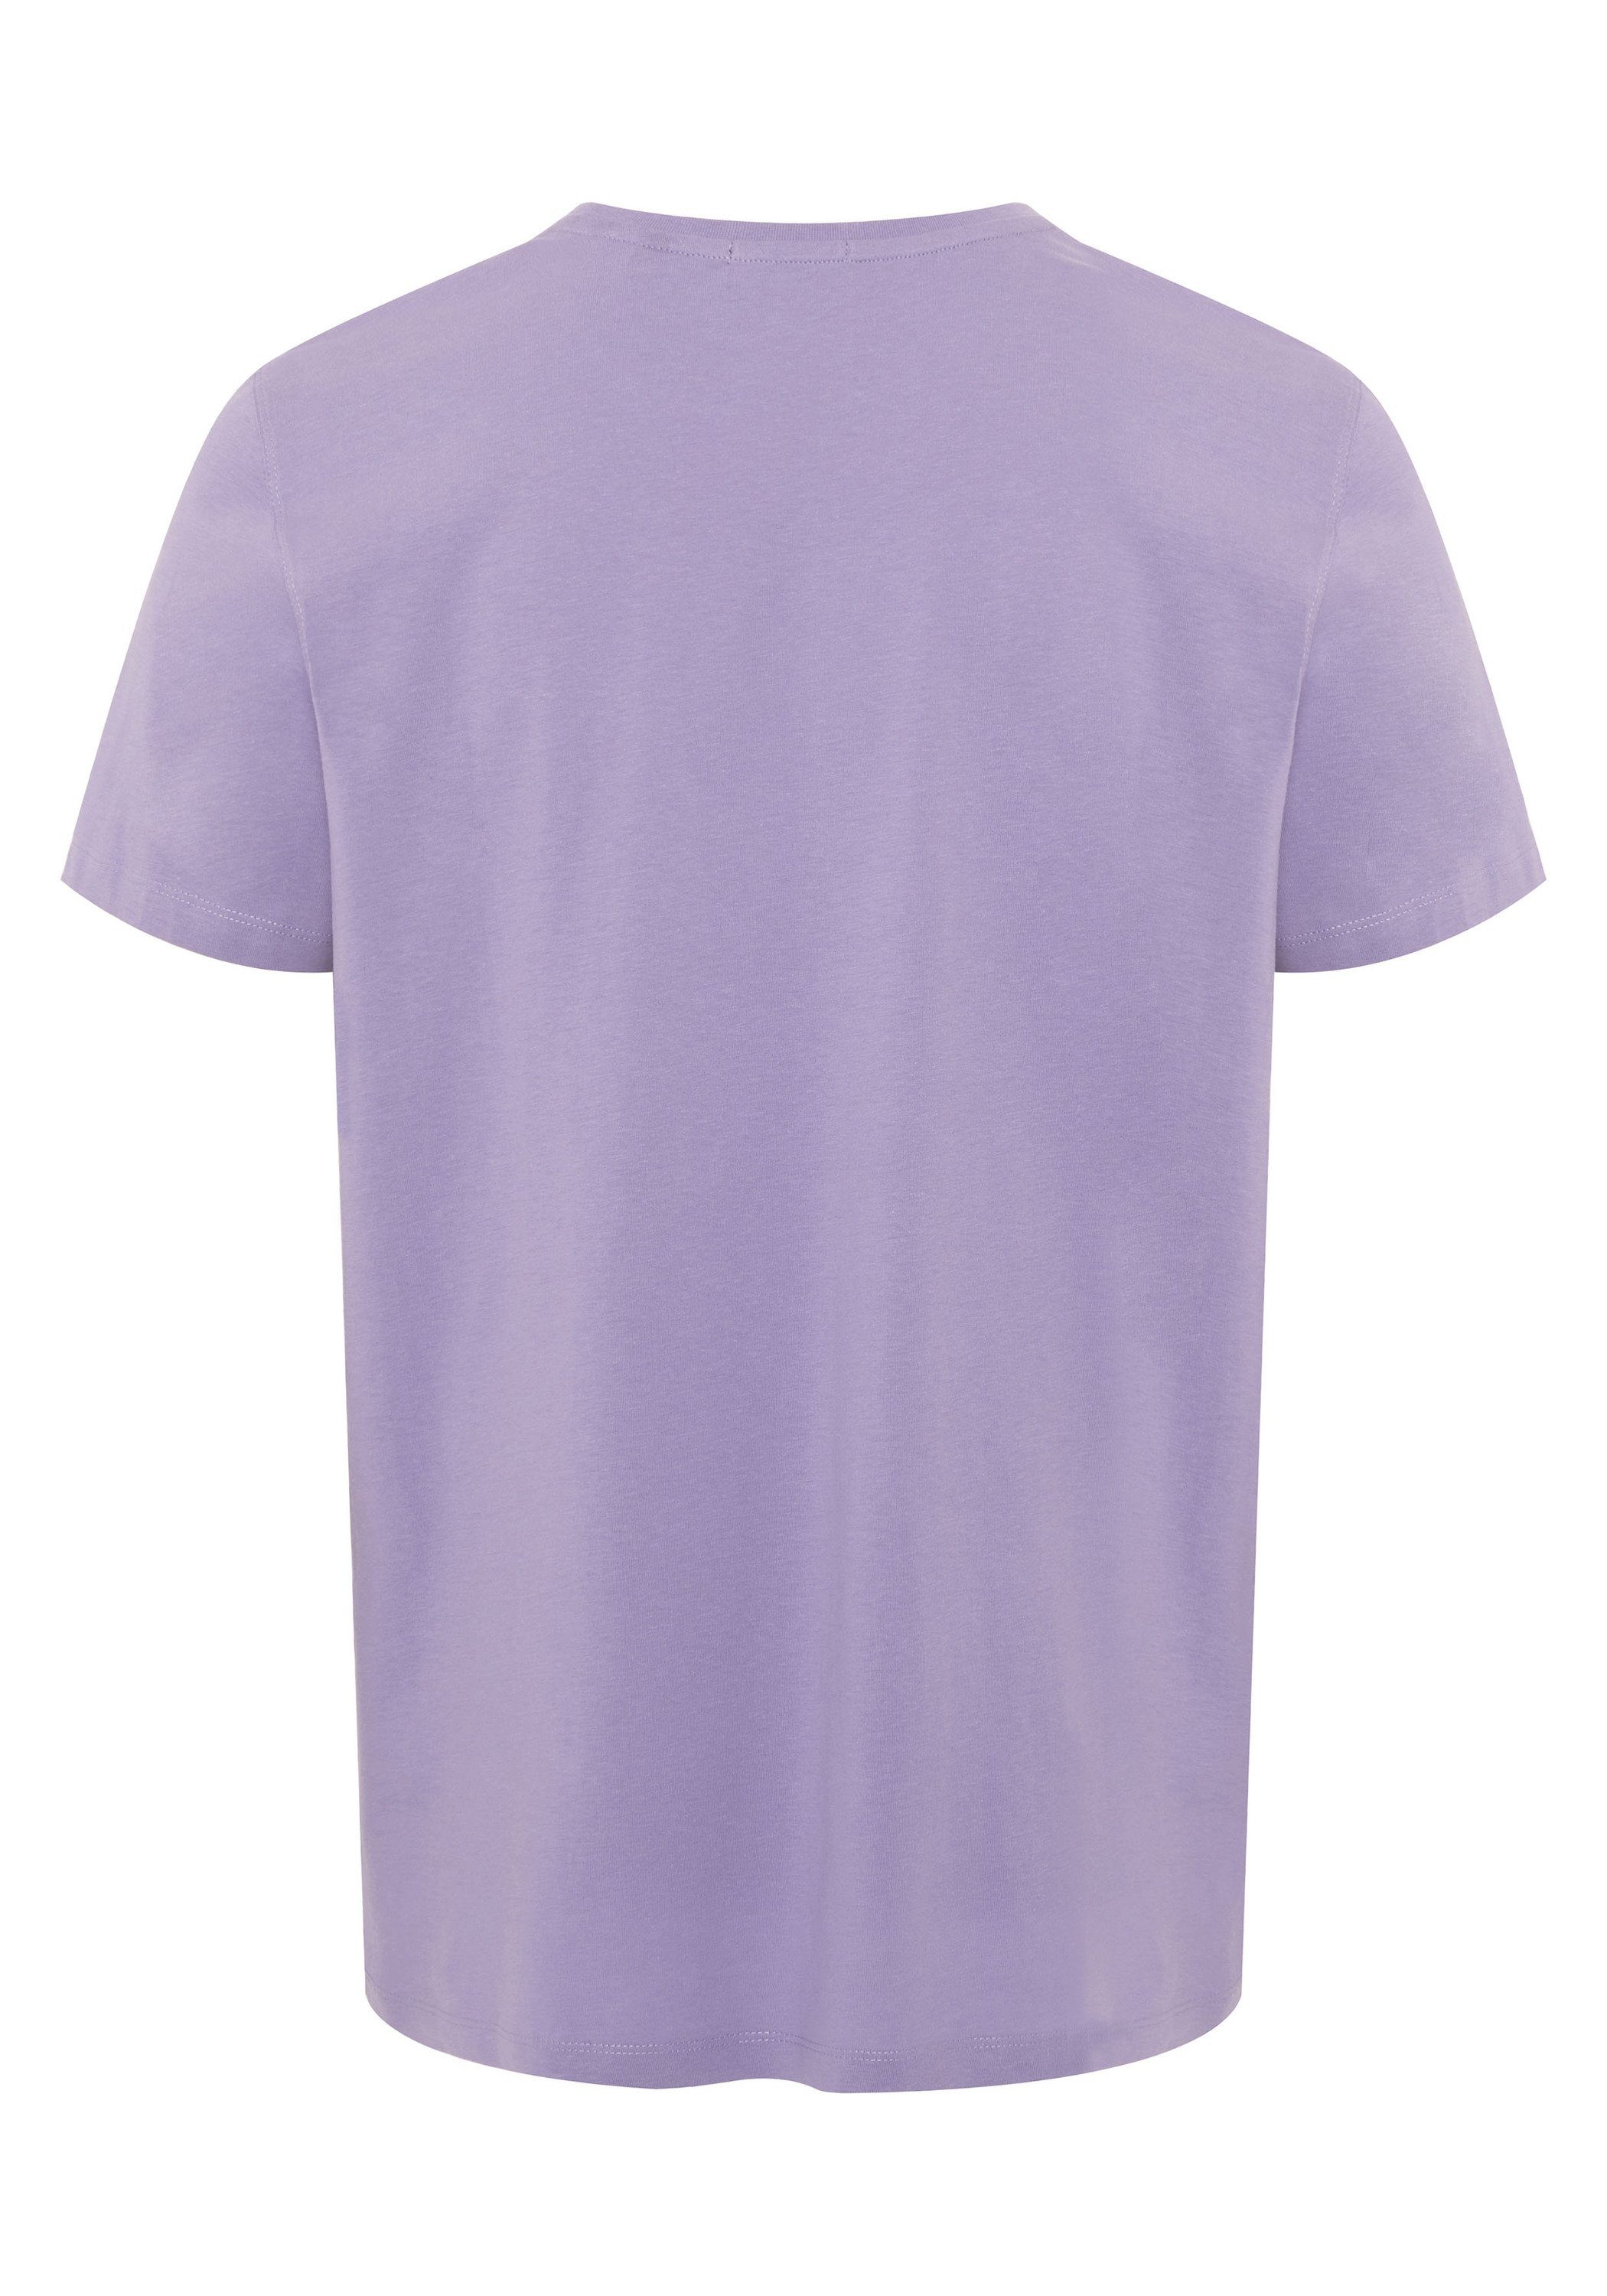 Label-Symbol mit Print-Shirt 1 gedrucktem Violet T-Shirt Chalk Chiemsee